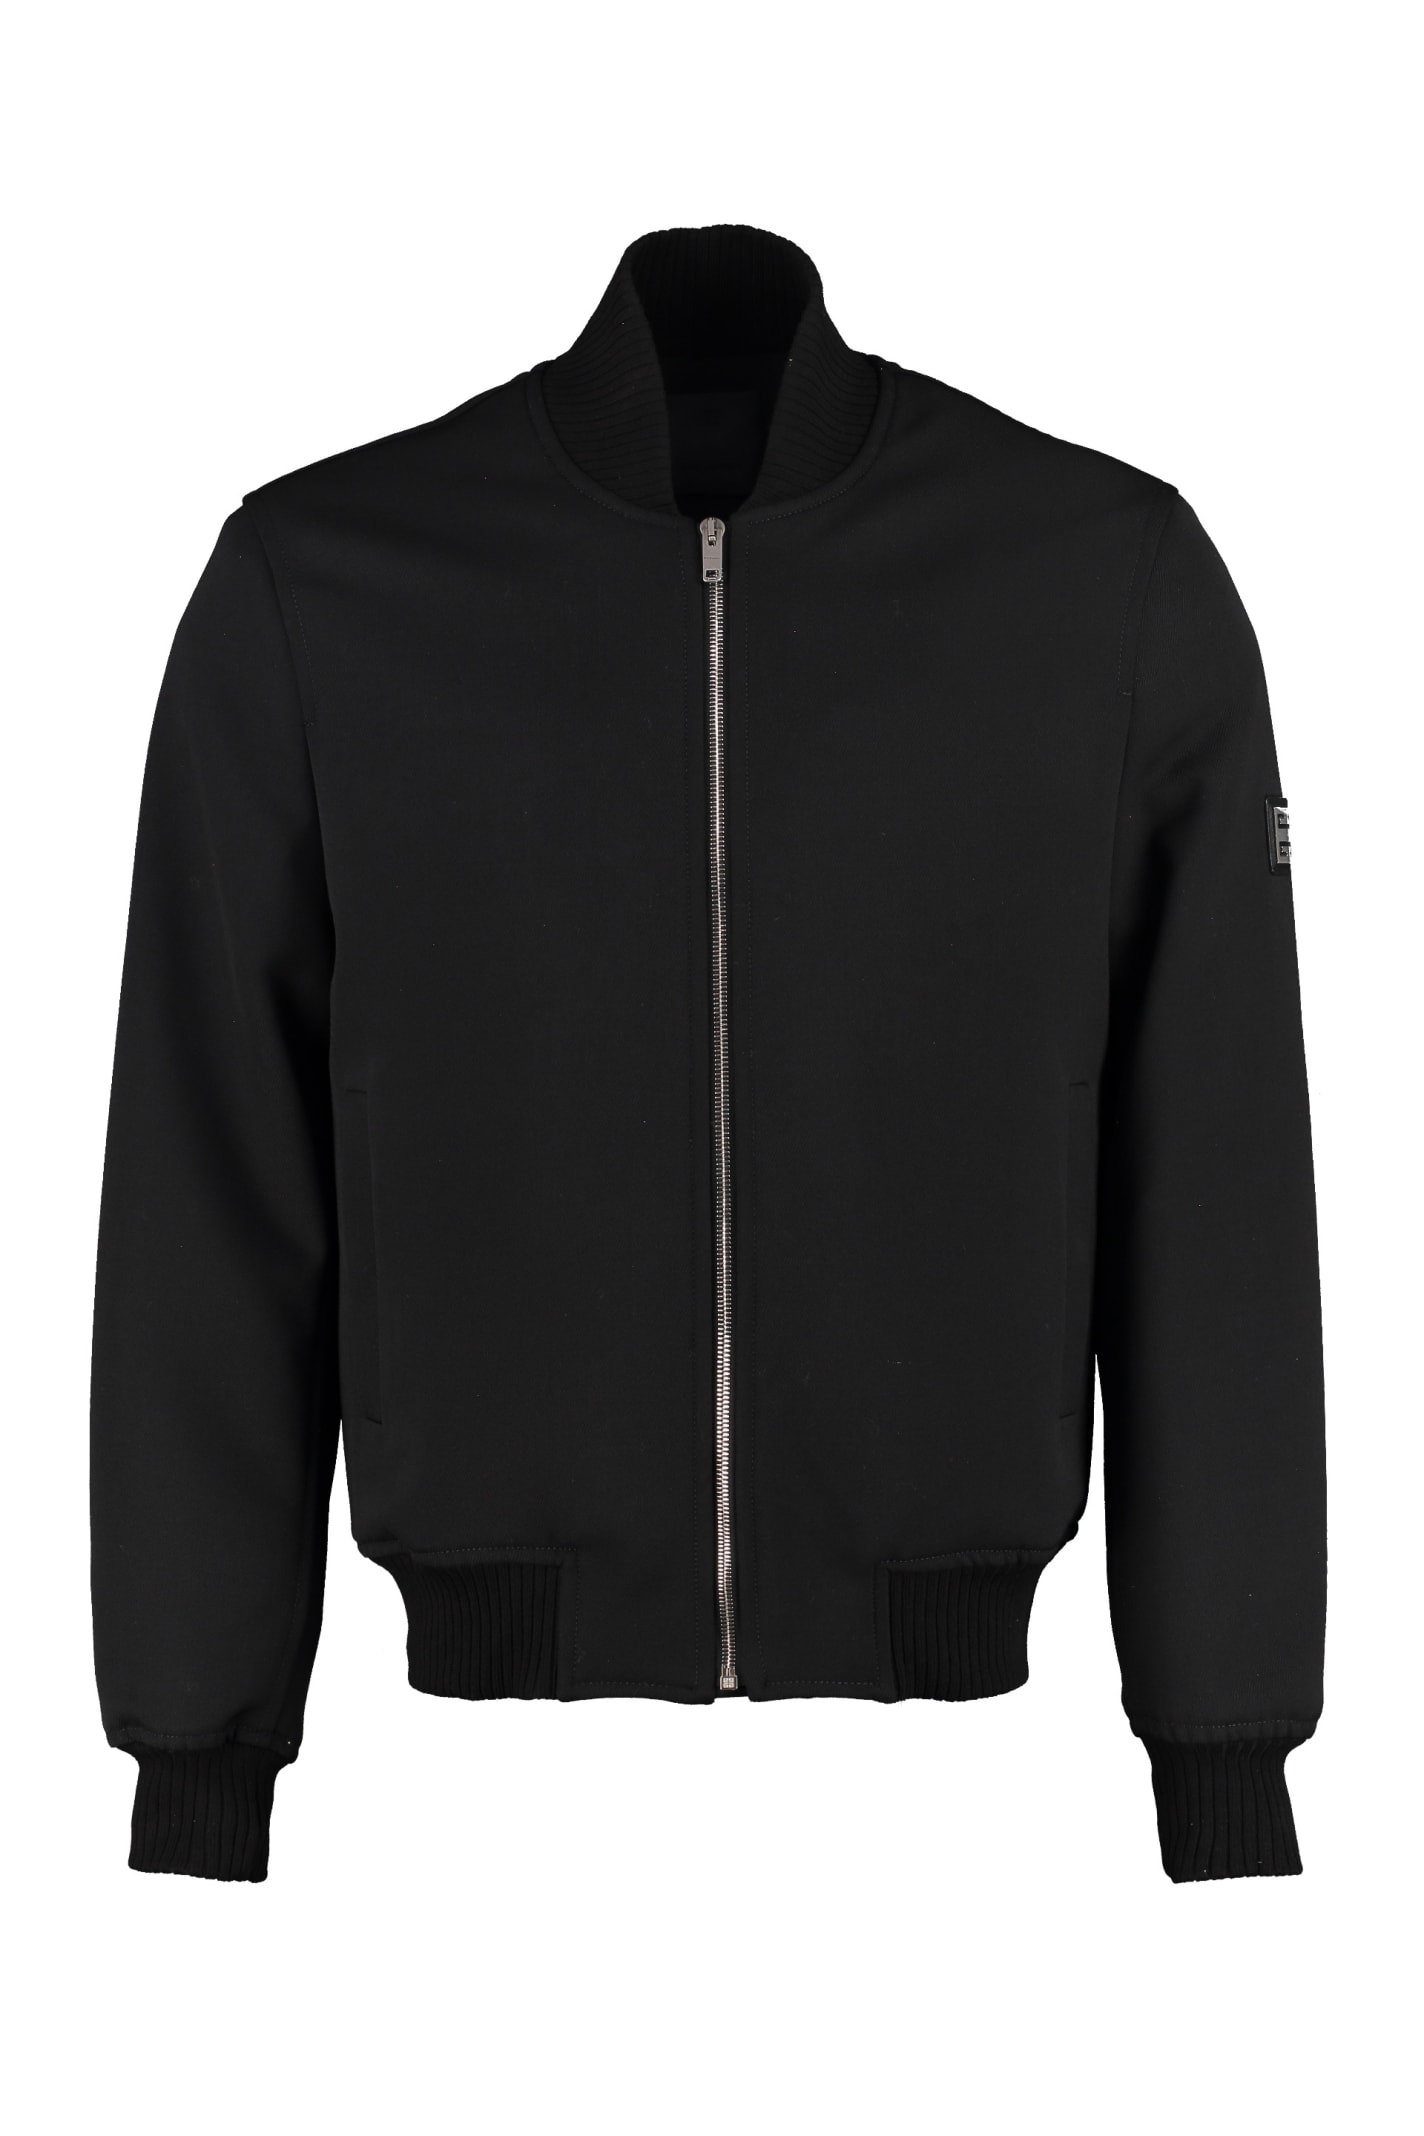 Givenchy Wool Bomber-style Jacket